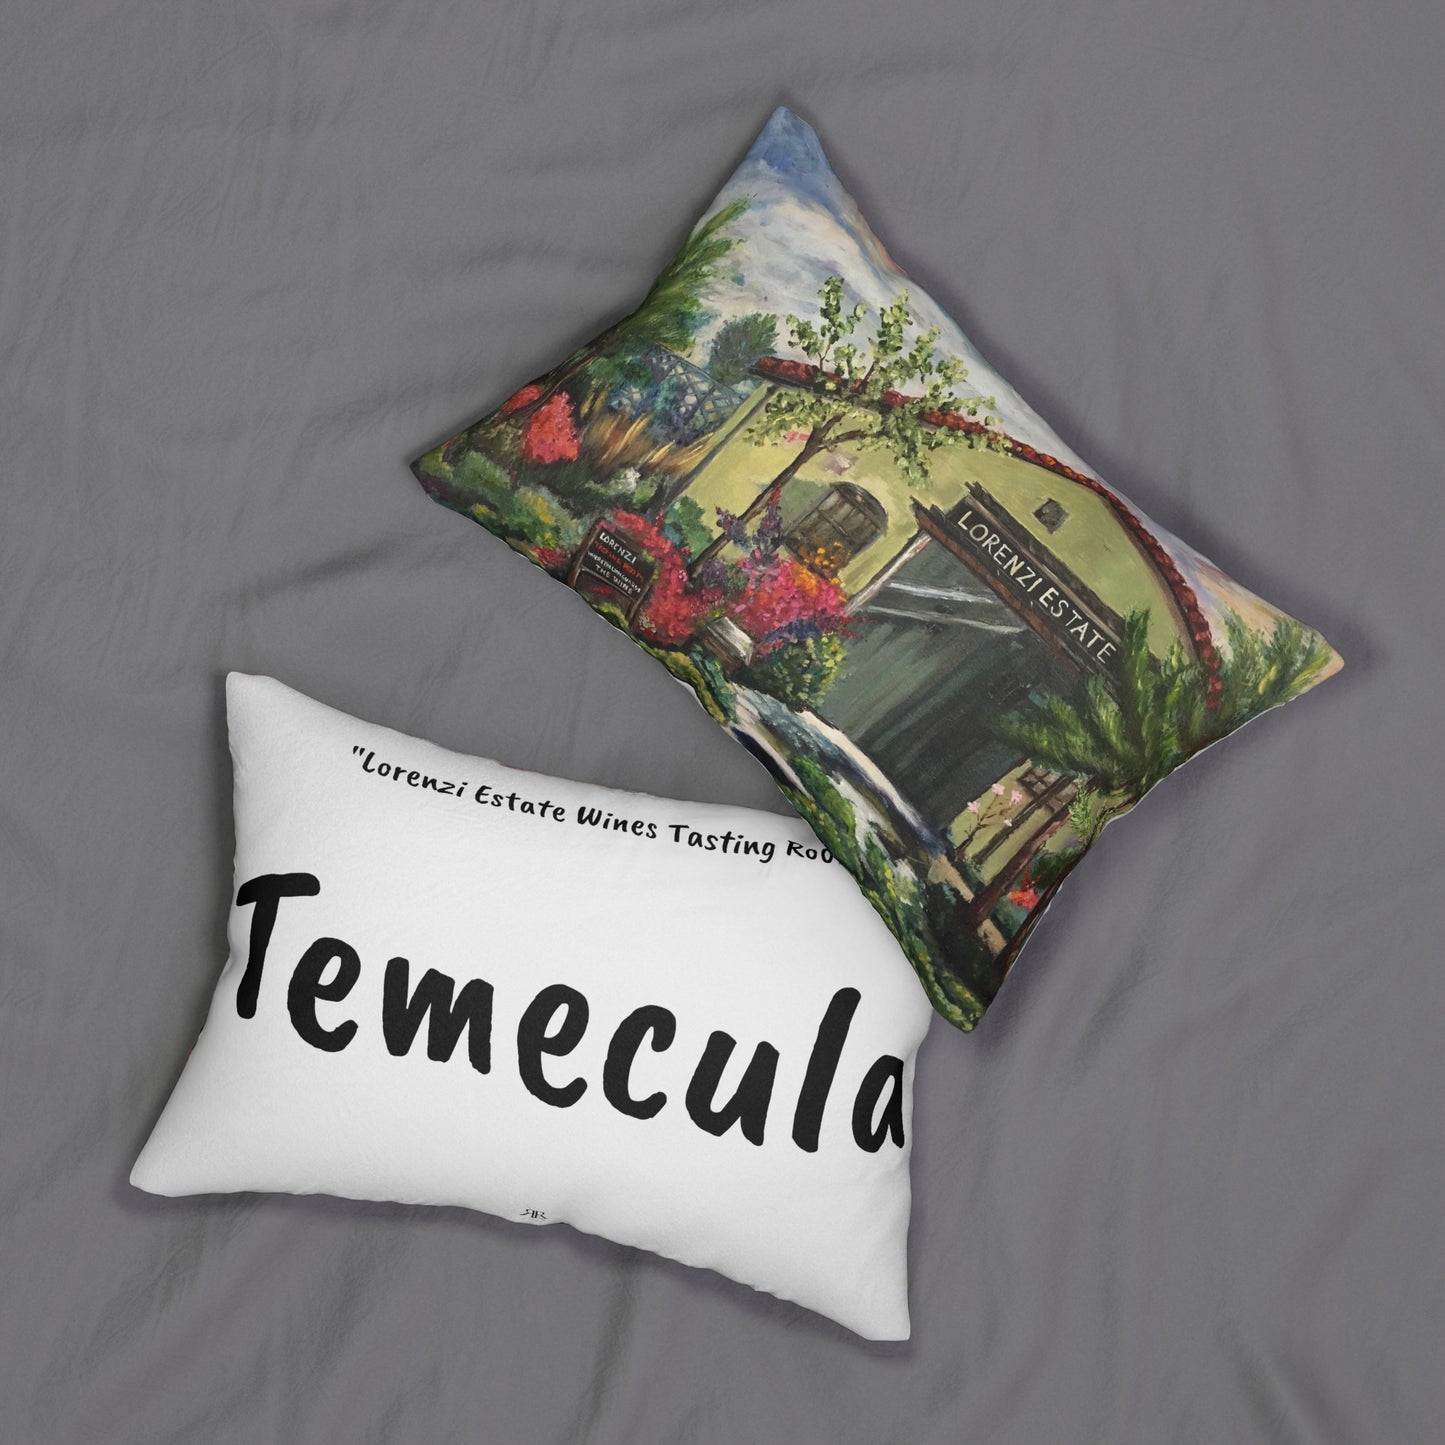 Almohada lumbar Temecula con pintura "Lorenzi Estate Wines Tasting Room" y "Temecula"